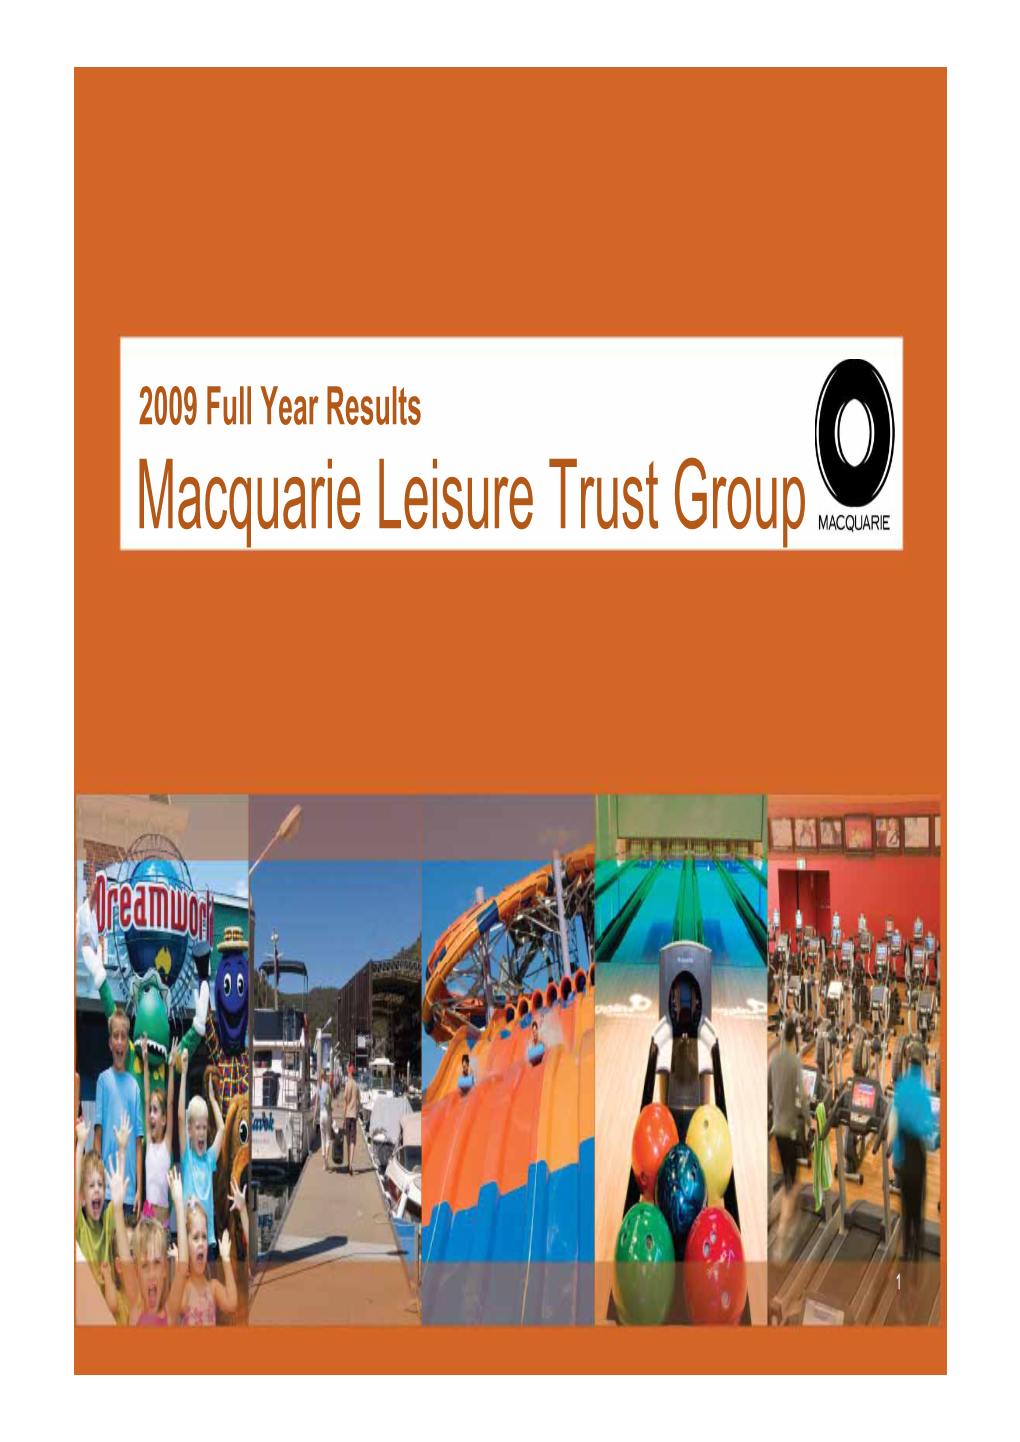 Macquarie Leisure Trust Group